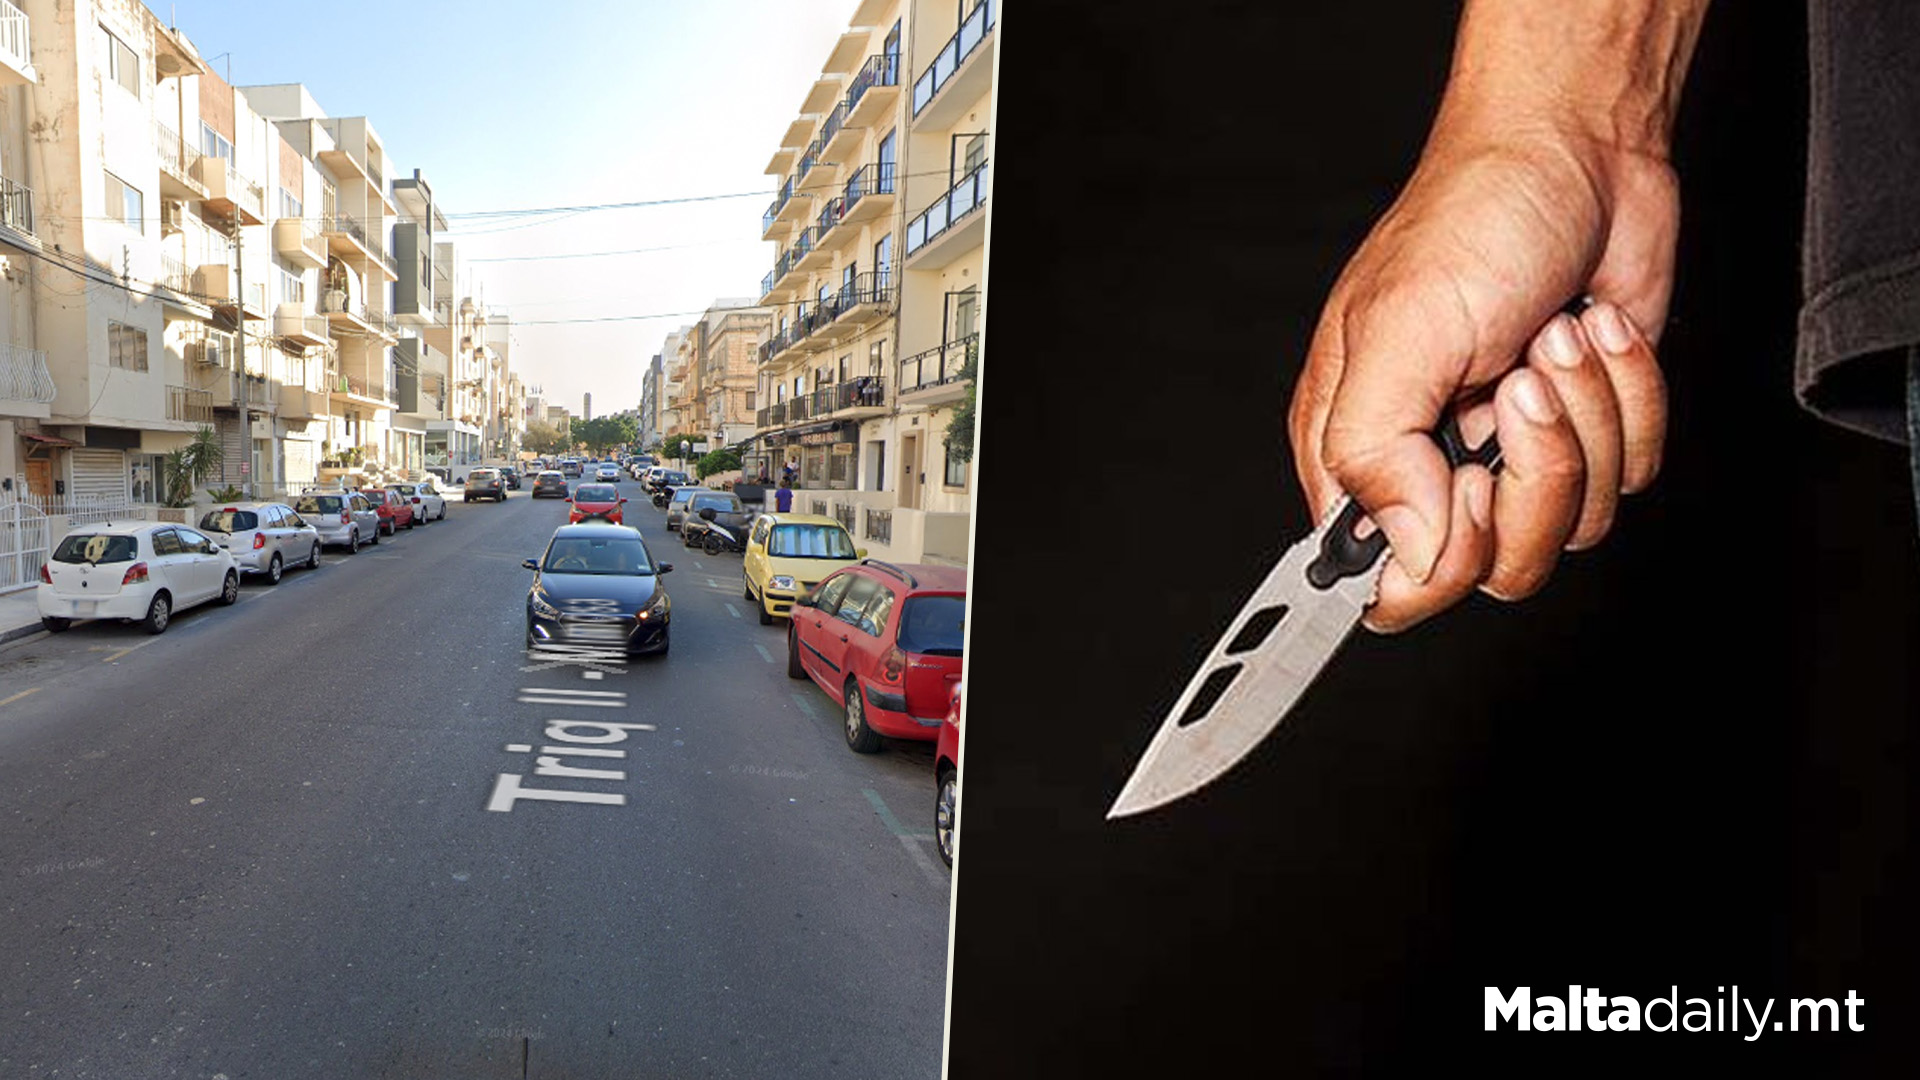 Man Grievously Injured In Reported Knife Fight In Ħamrun